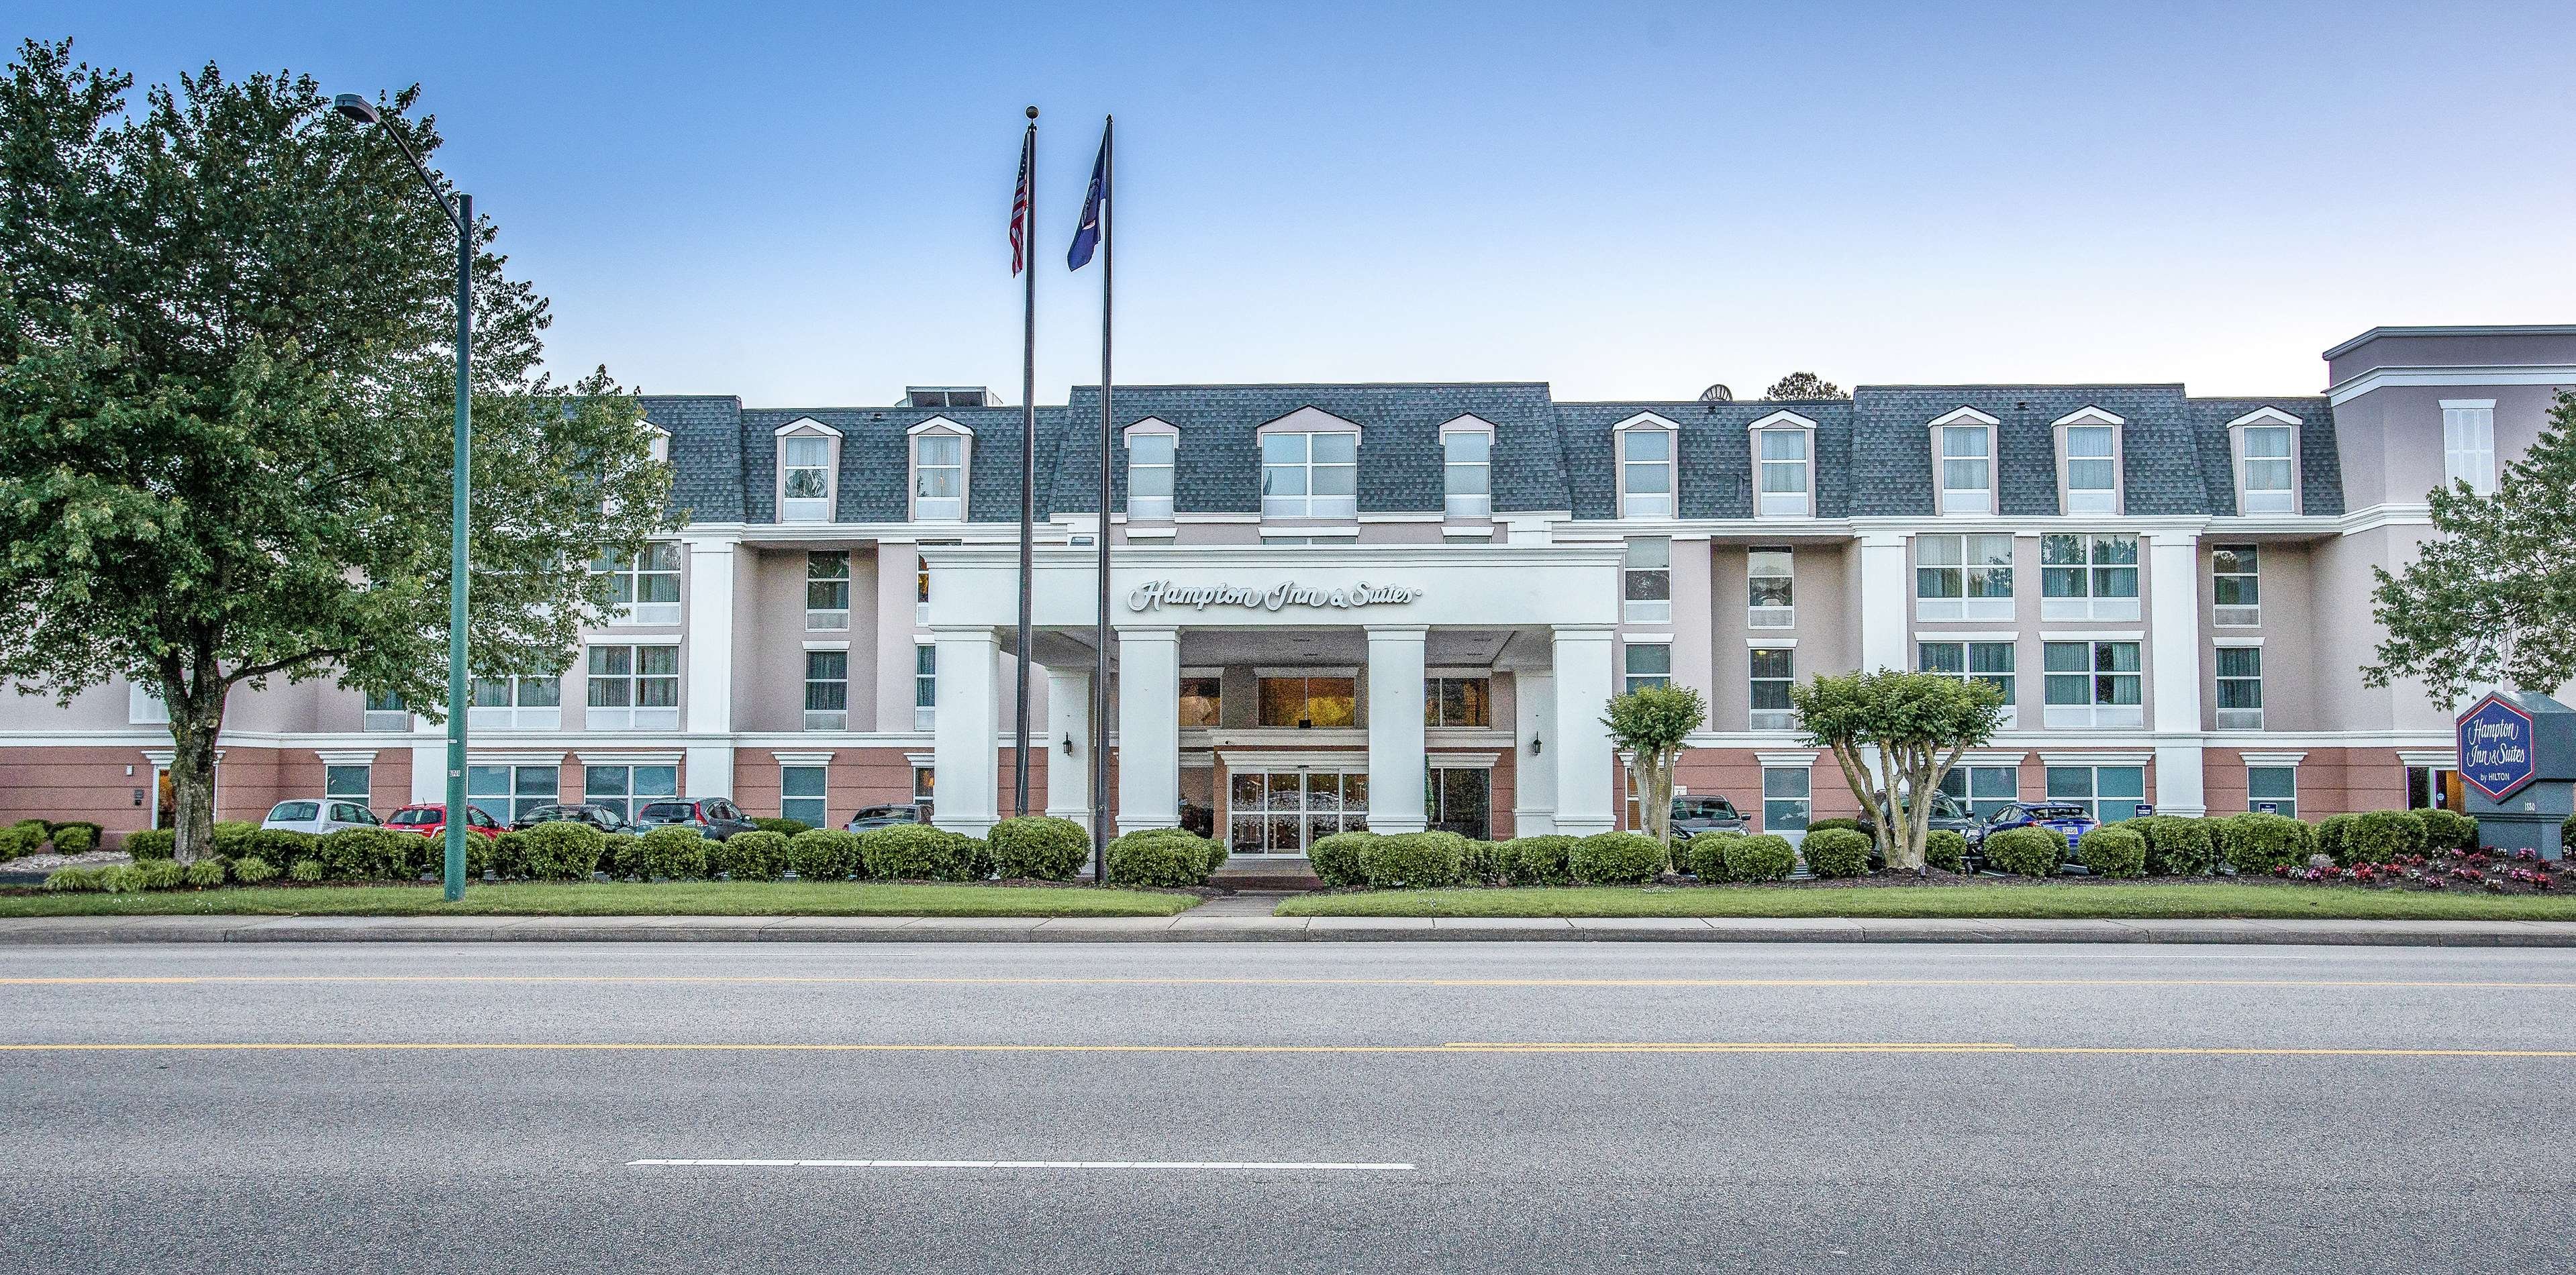 Hampton Inn & Suites Williamsburg-Richmond Rd. image